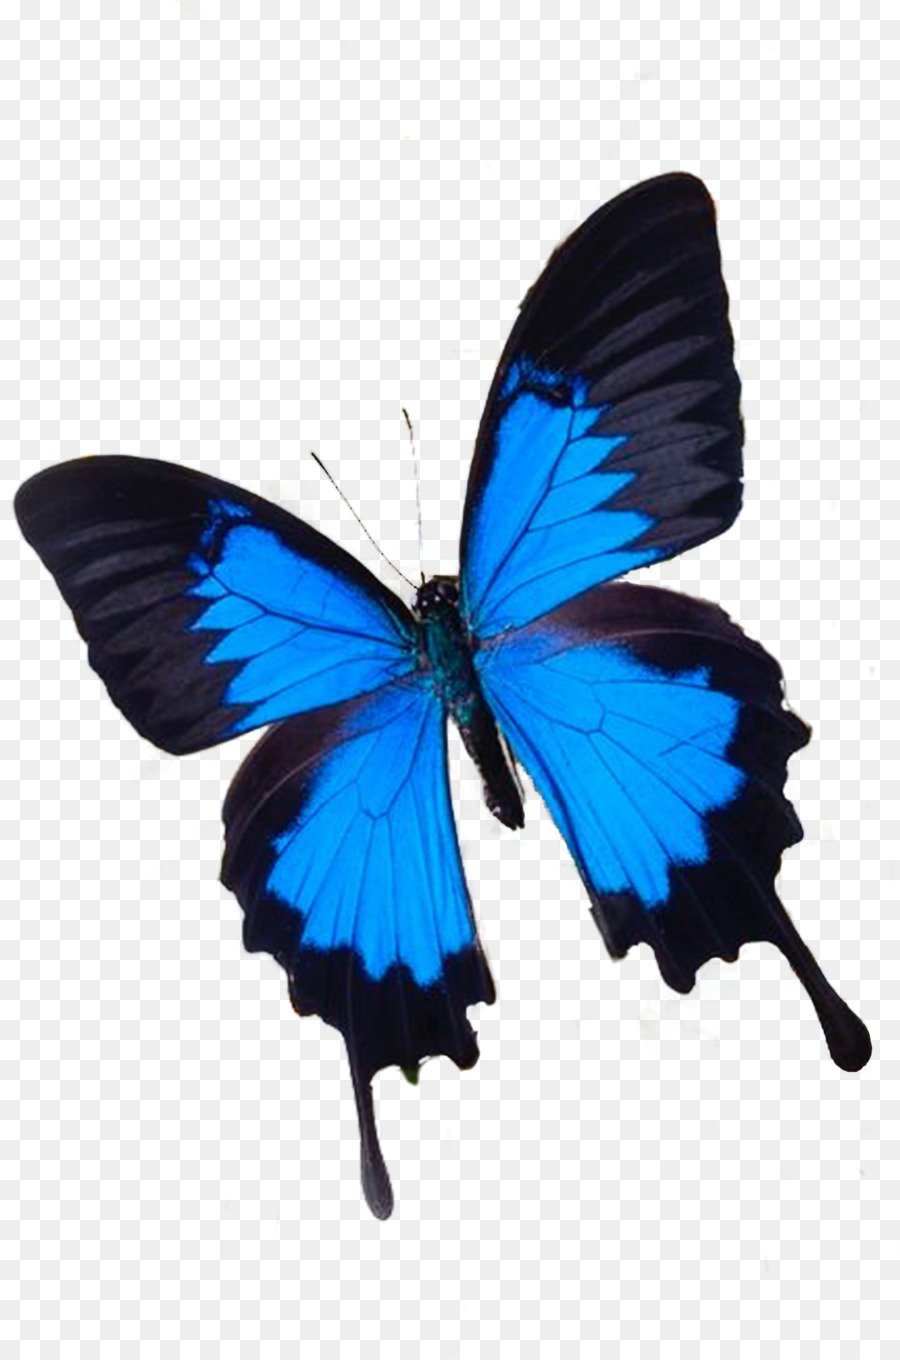 Schmetterling Blau-Weiße Blume, Fotografie - Schmetterling